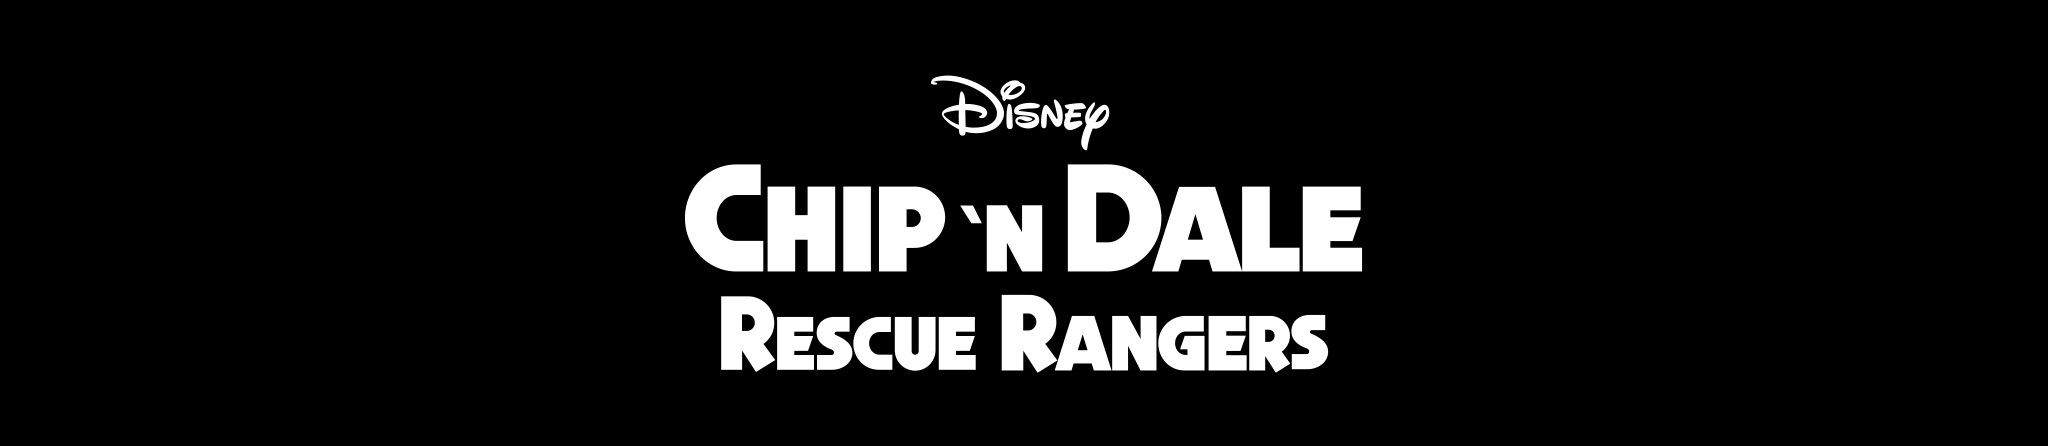 Disney | Chip 'n Dale: Rescue Rangers